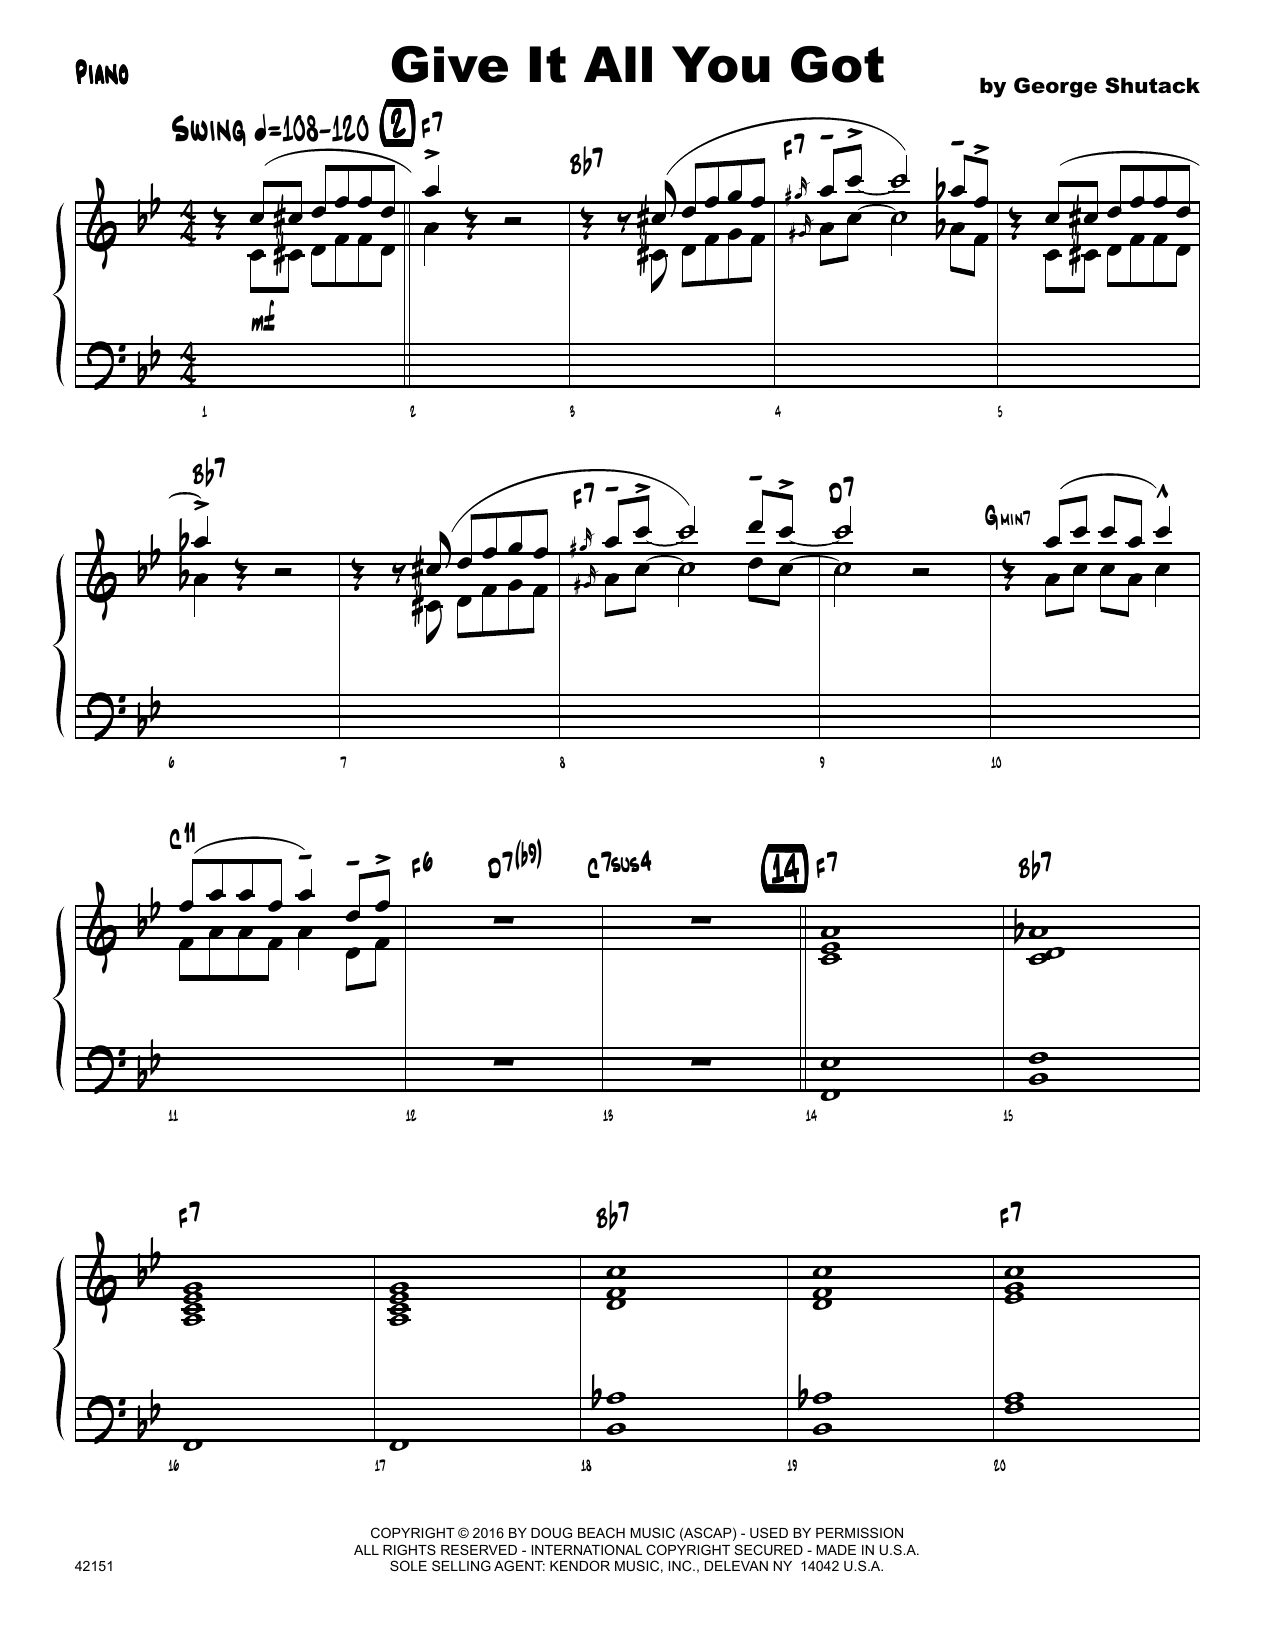 Download George Shutack Give It All You Got - Piano Sheet Music